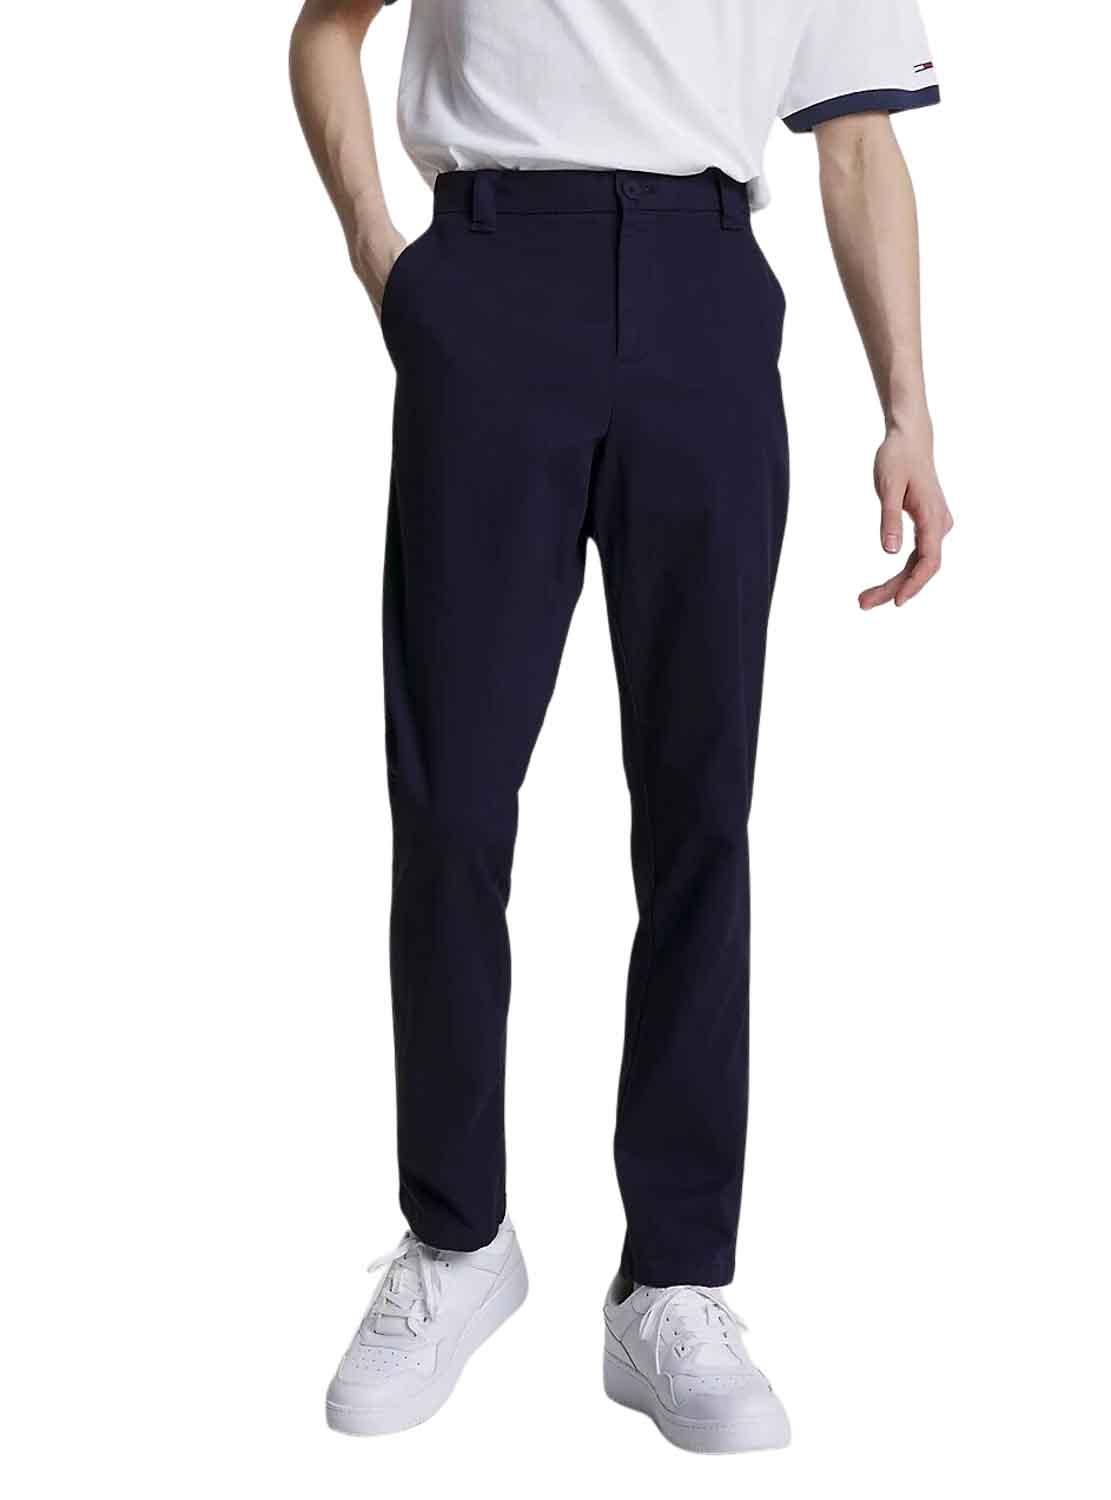 Pantaloni Tommy Jeans Austin Blu Navy per Uomo